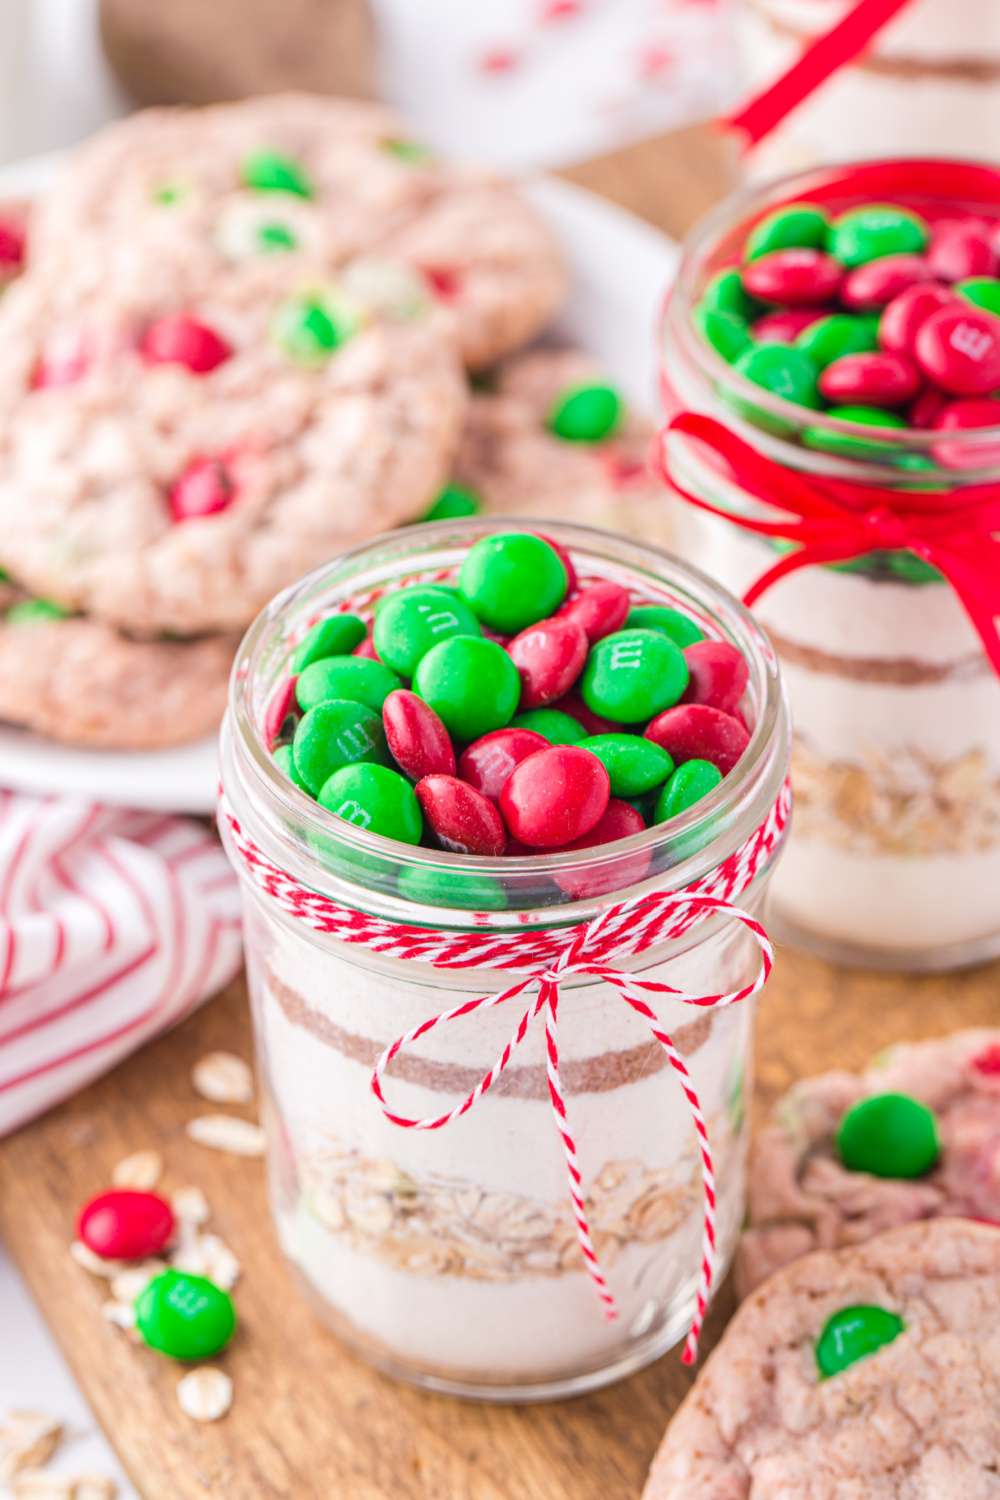 https://www.familyfreshmeals.com/wp-content/uploads/2021/12/Christmas-Cookie-Mix-in-a-Jar-8a.jpg